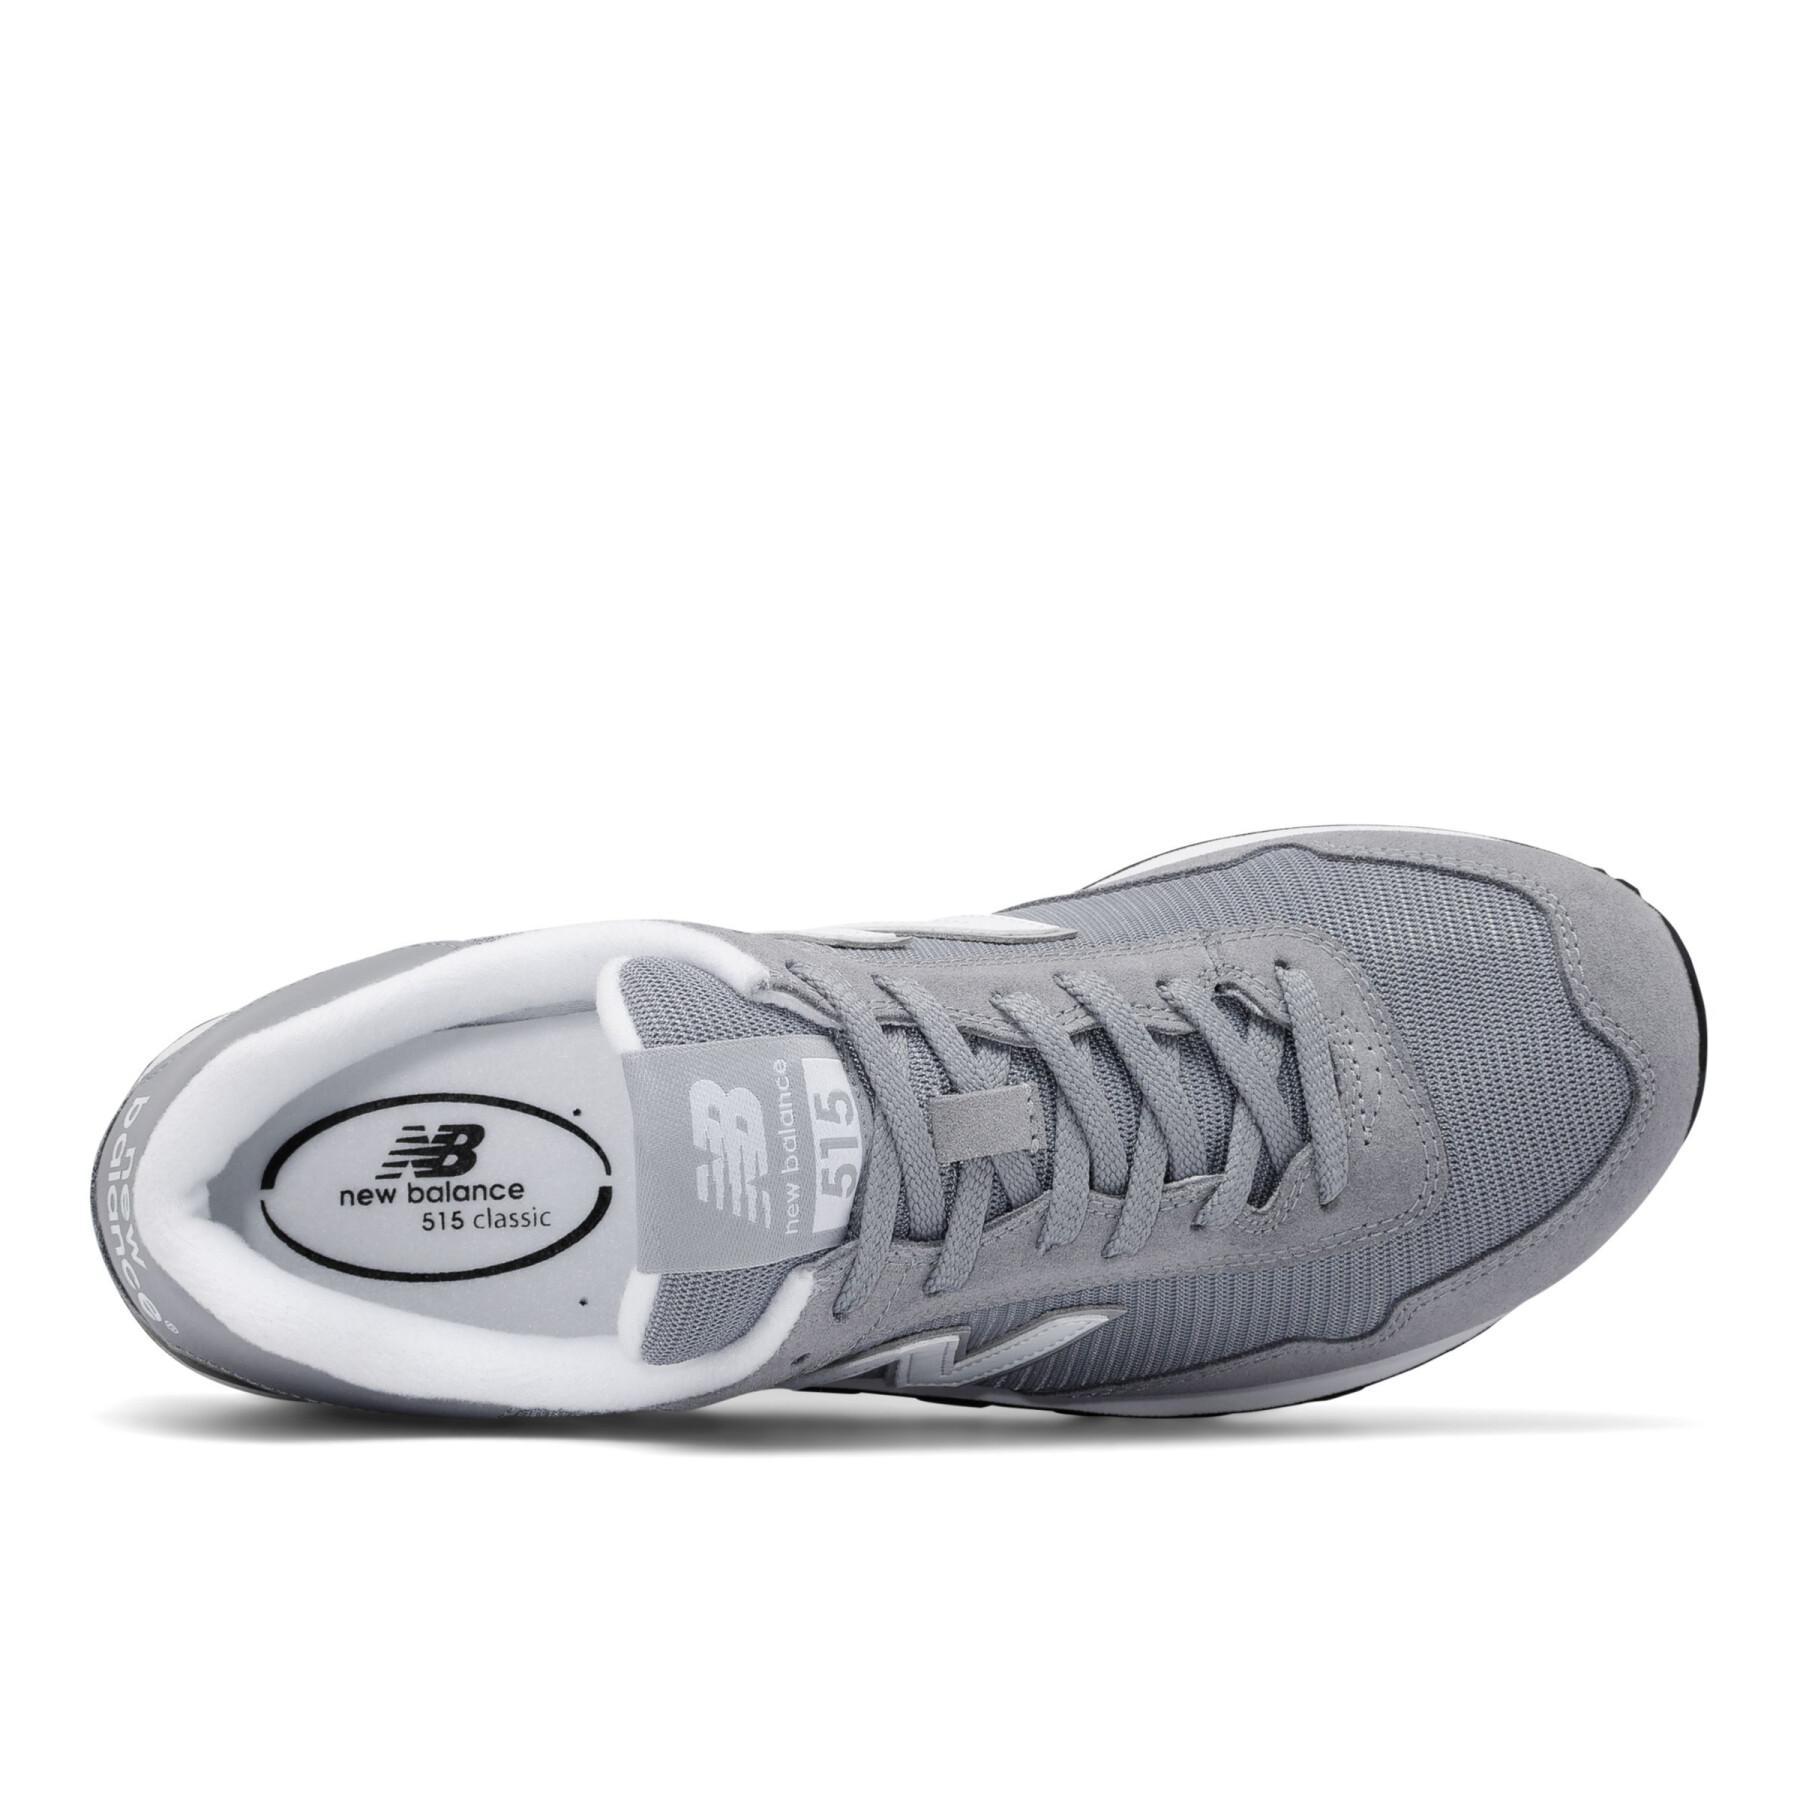 Sneaker New Balance 515 classic